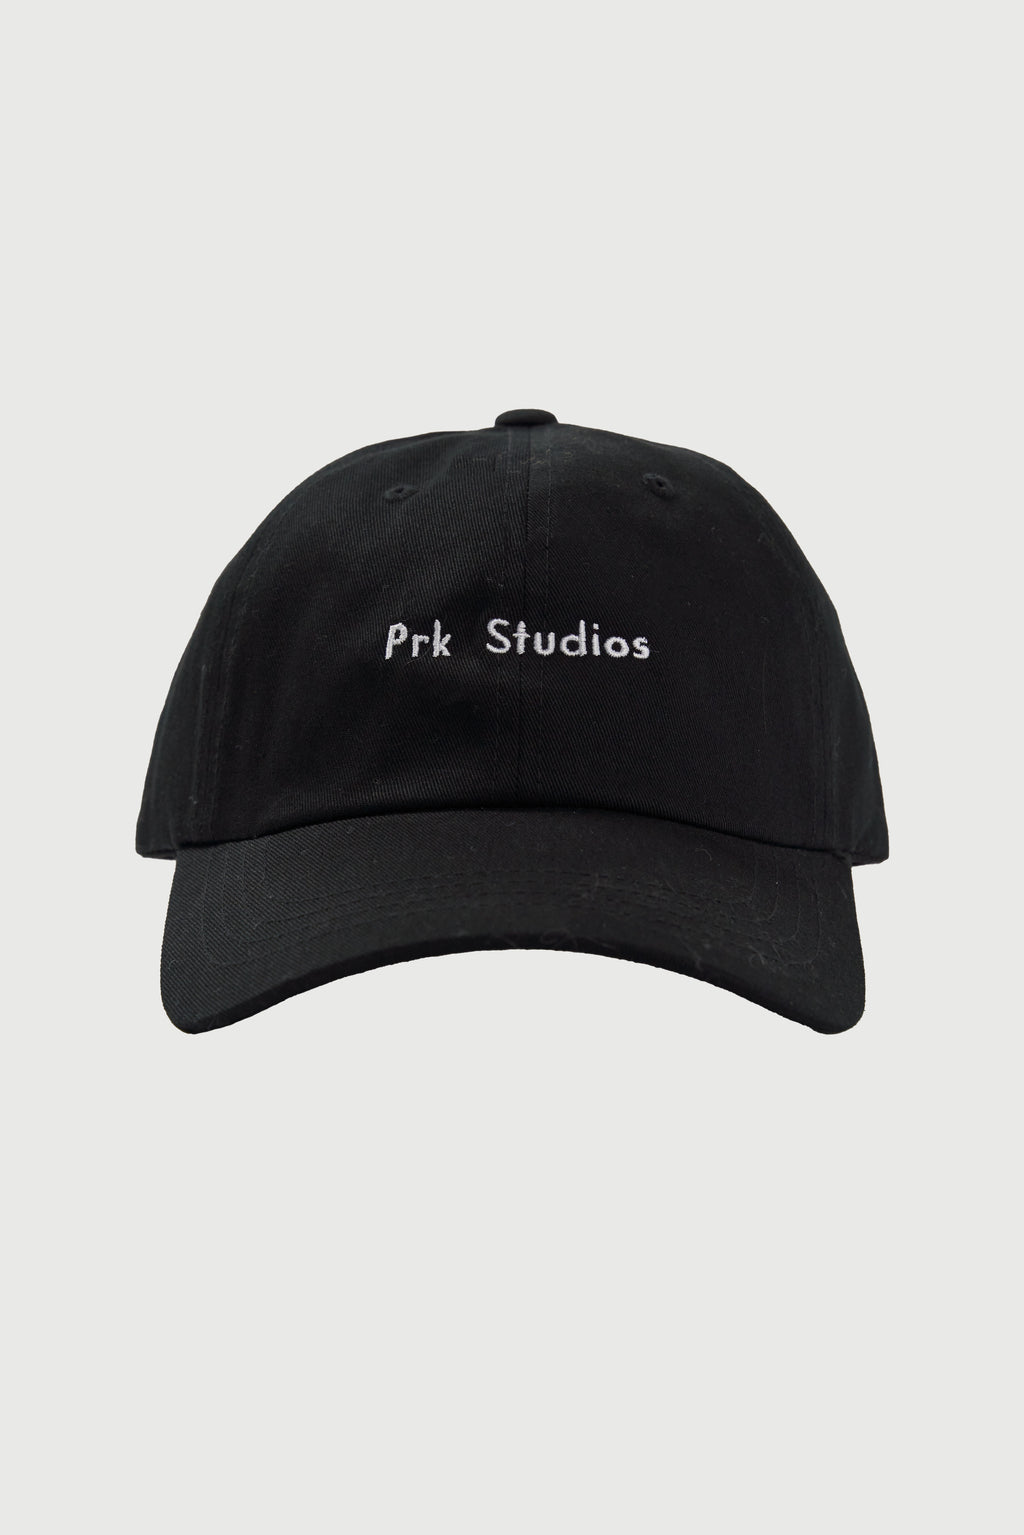 Prk Studios Cap